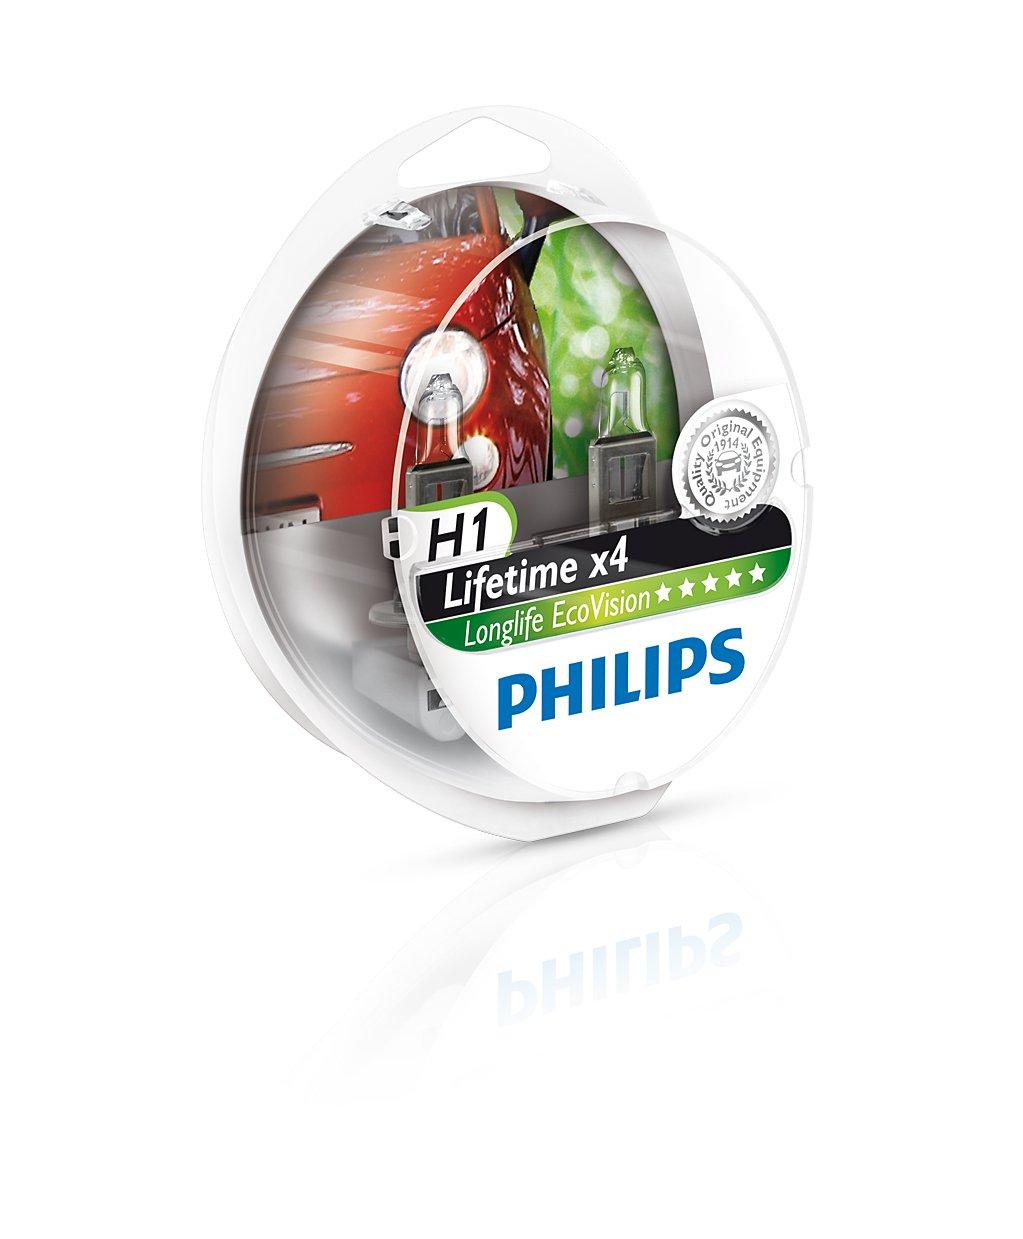 2017-10-19 PHILIPS H1 12V 55W P14,5s LongLife EcoVision Żarówki halogenowe h2 LongLife EcoVision marki Philips.